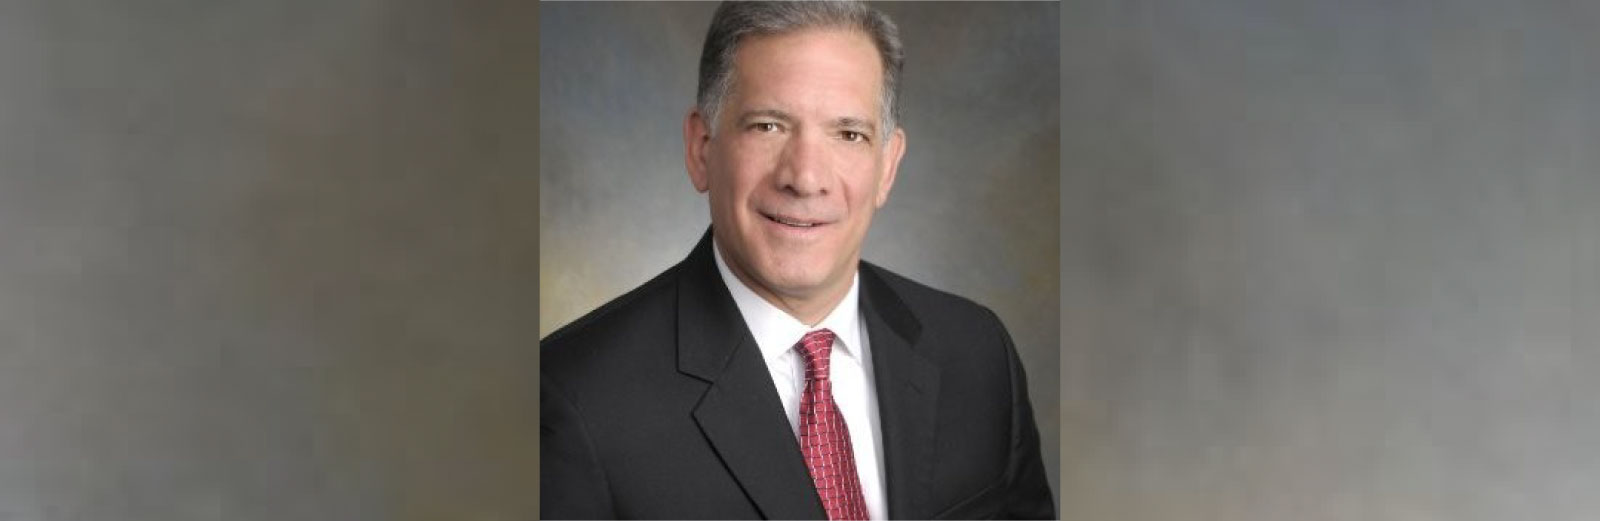 Retail real estate industry veteran Steve Vittorio joins Board of Directors